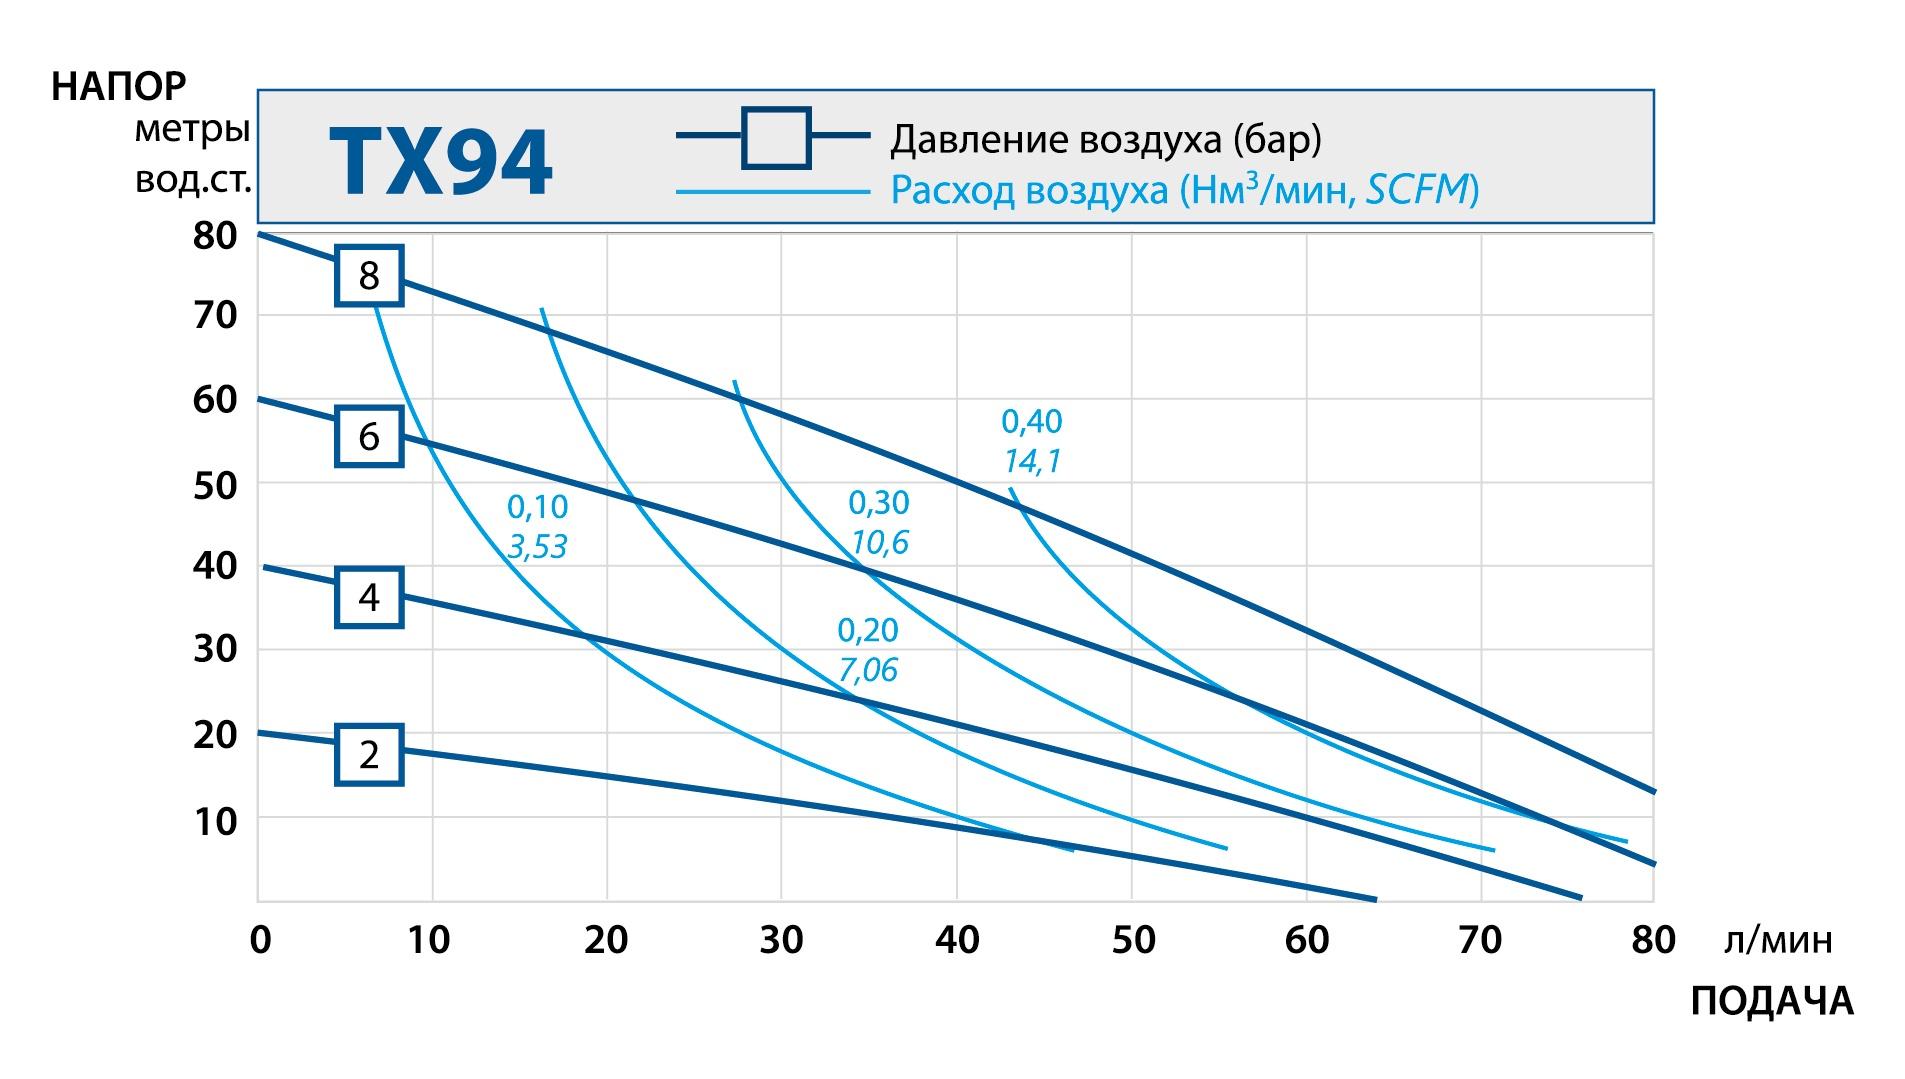 TX94 performance curve